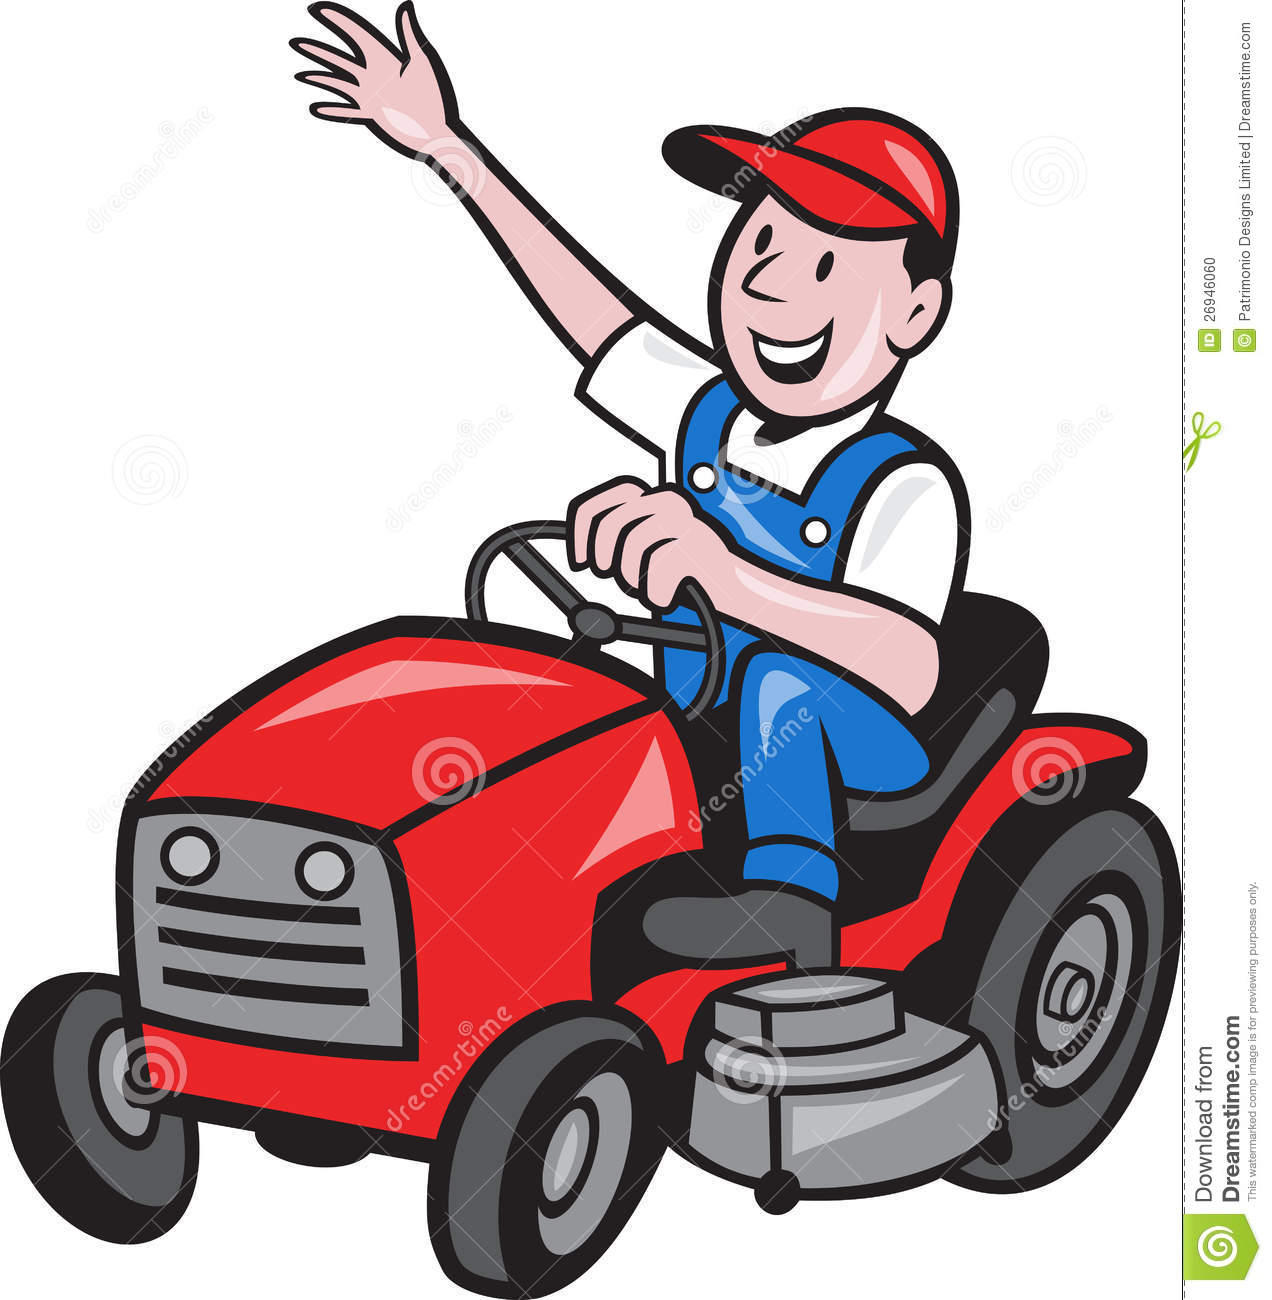 Cartoon Riding Lawn Mower Farmer Driving Ride On Mower